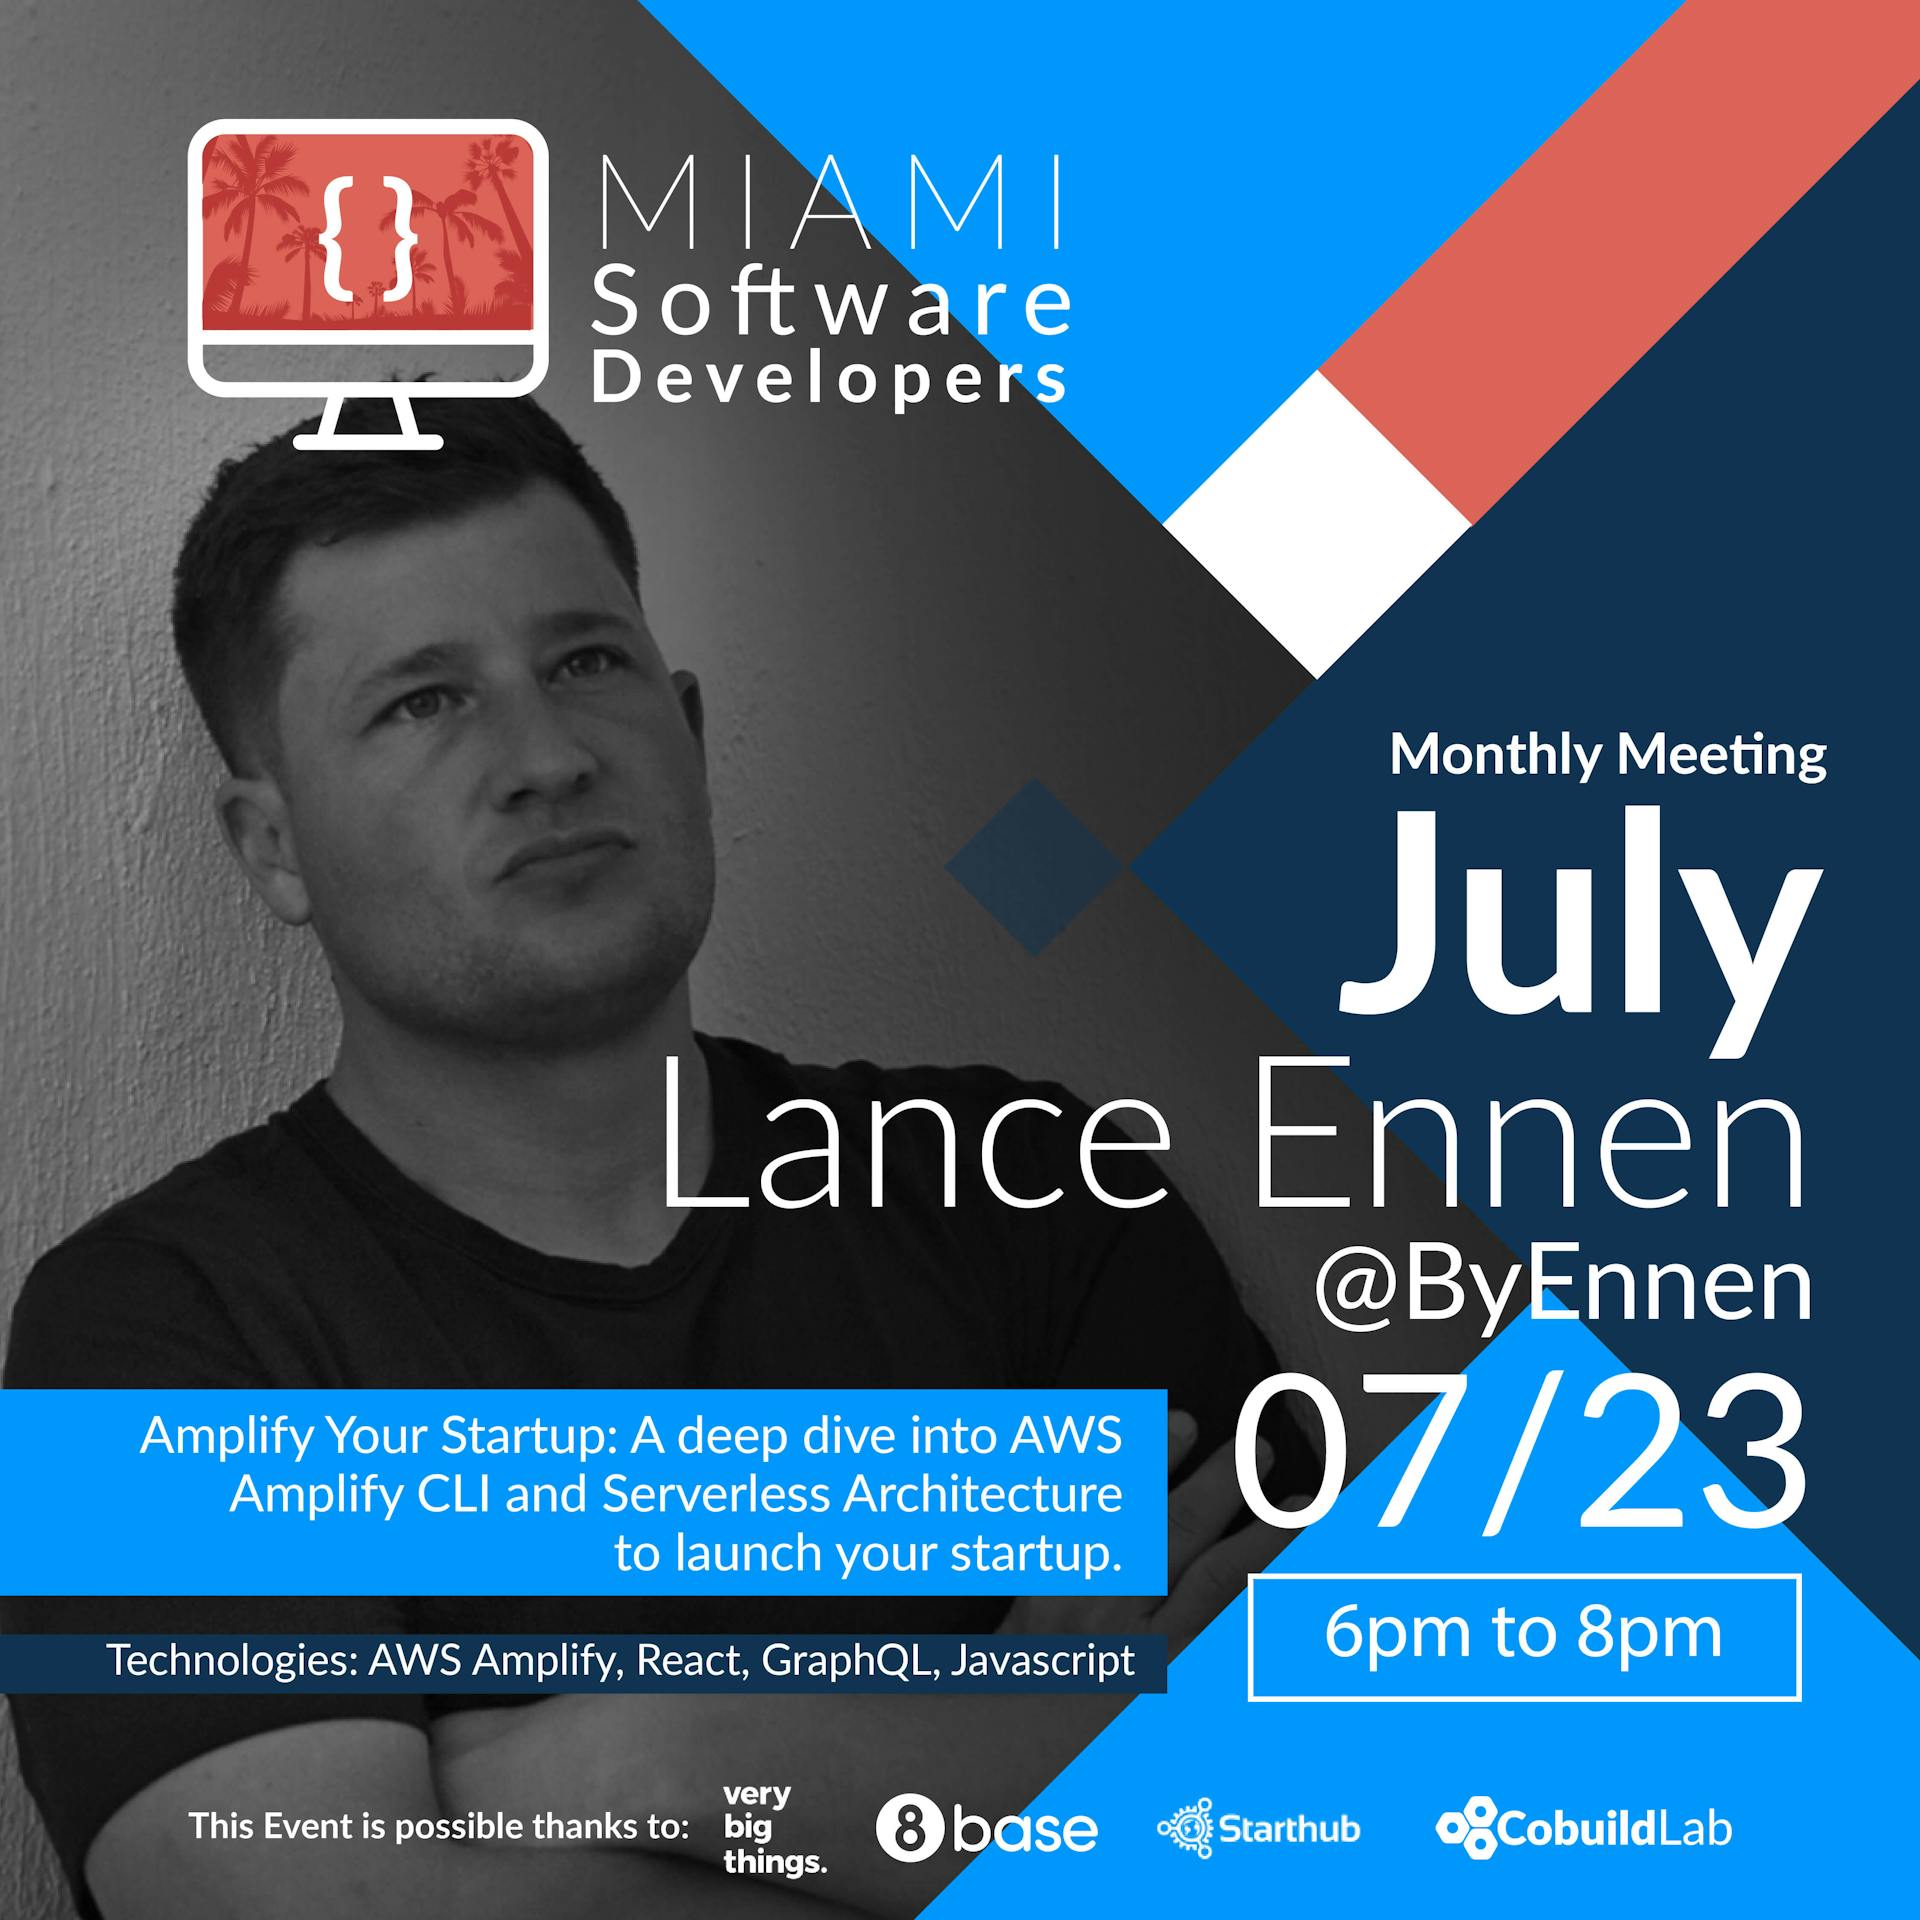 Miami Software Developers